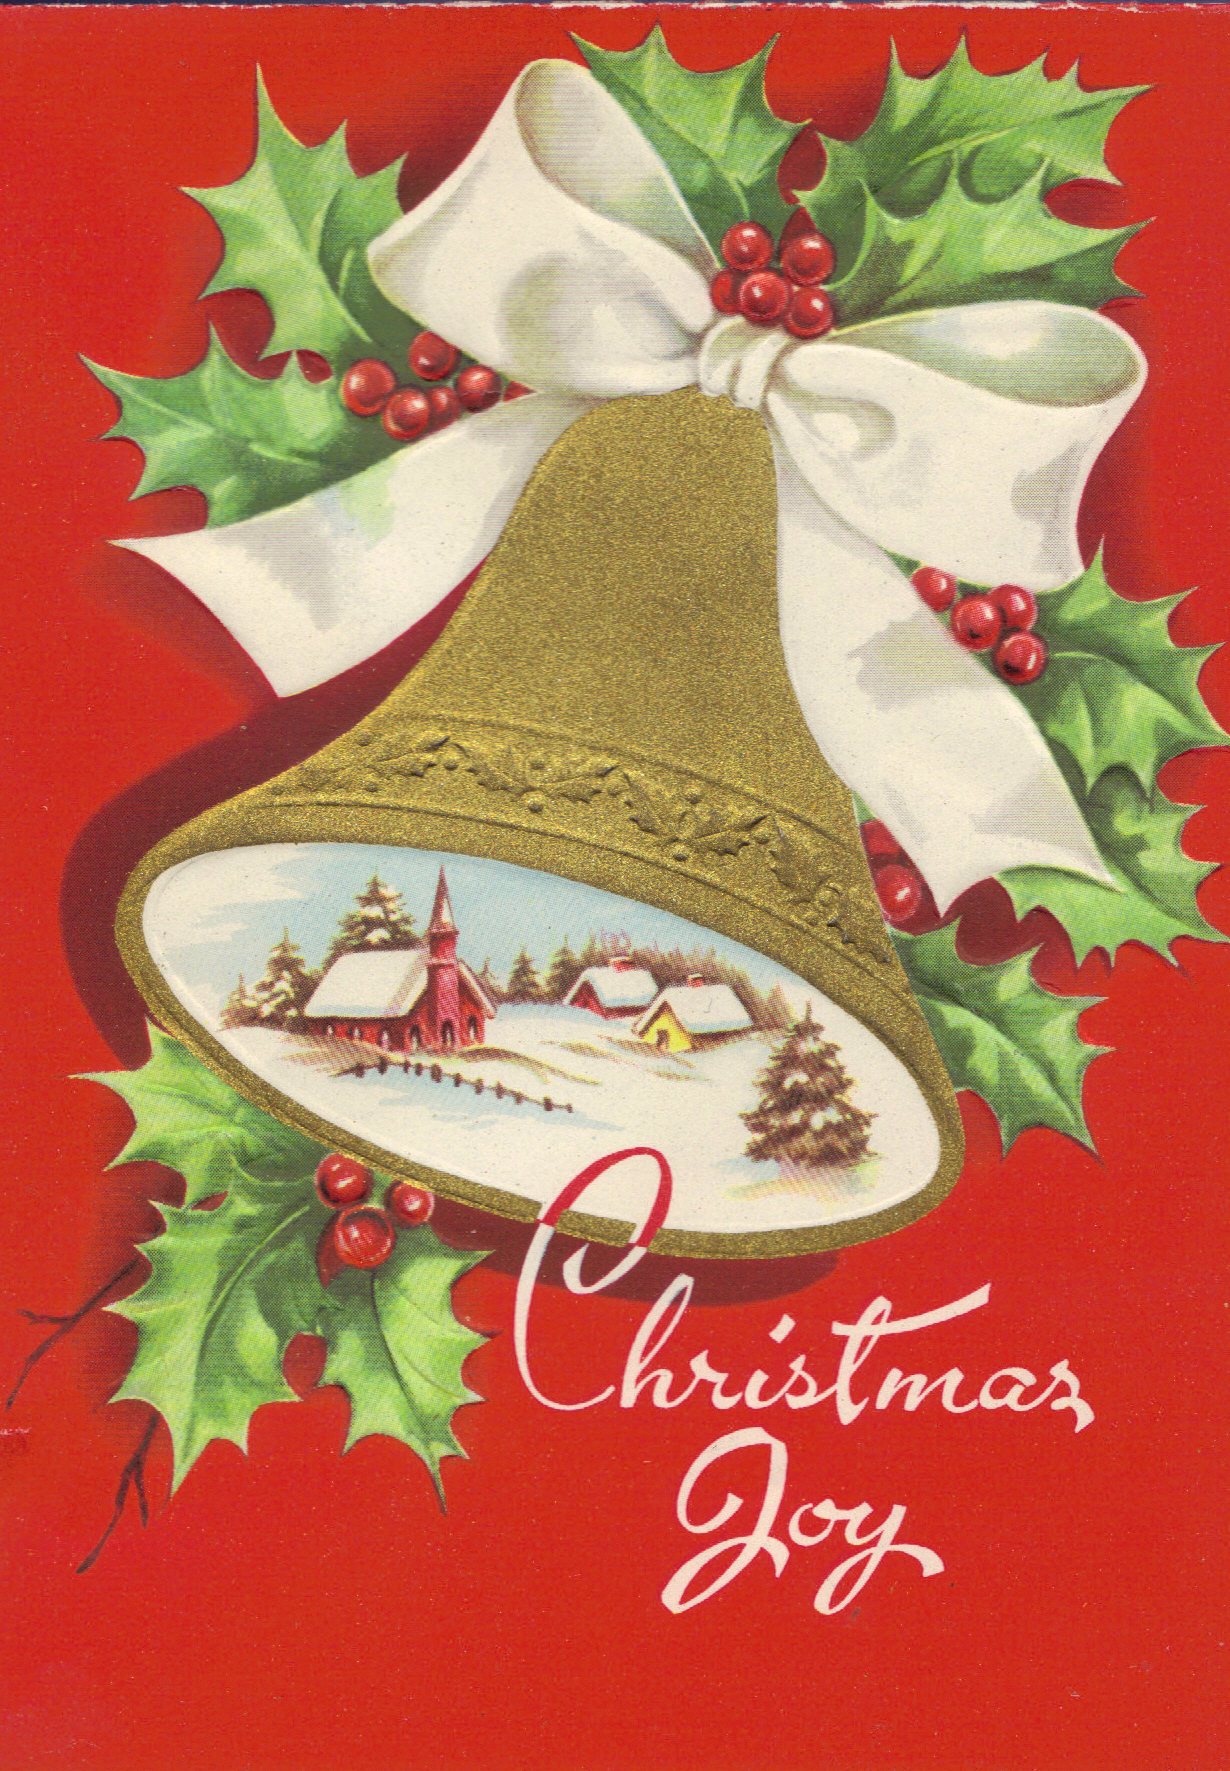 http://carlahoag.files.wordpress.com/2009/12/vintage-christmas-card-i-back.jpg